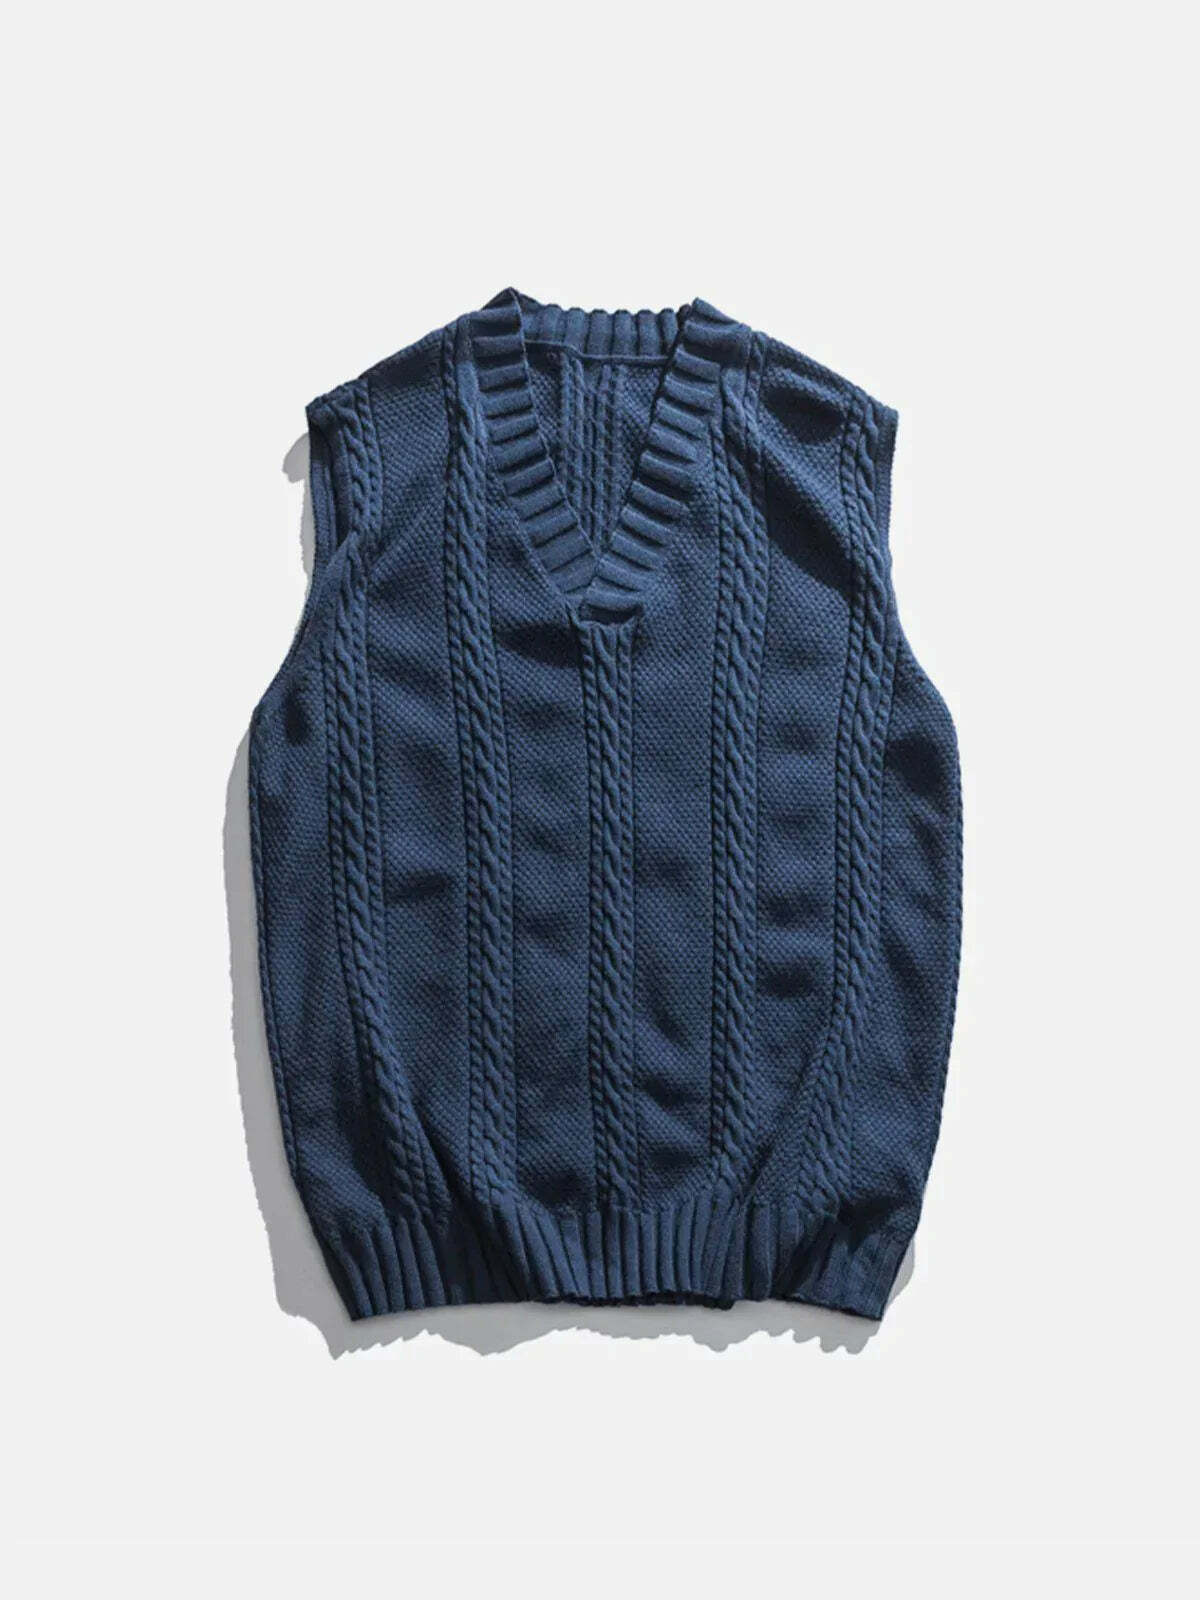 braided knit sweater vest edgy y2k fashion essential 7344